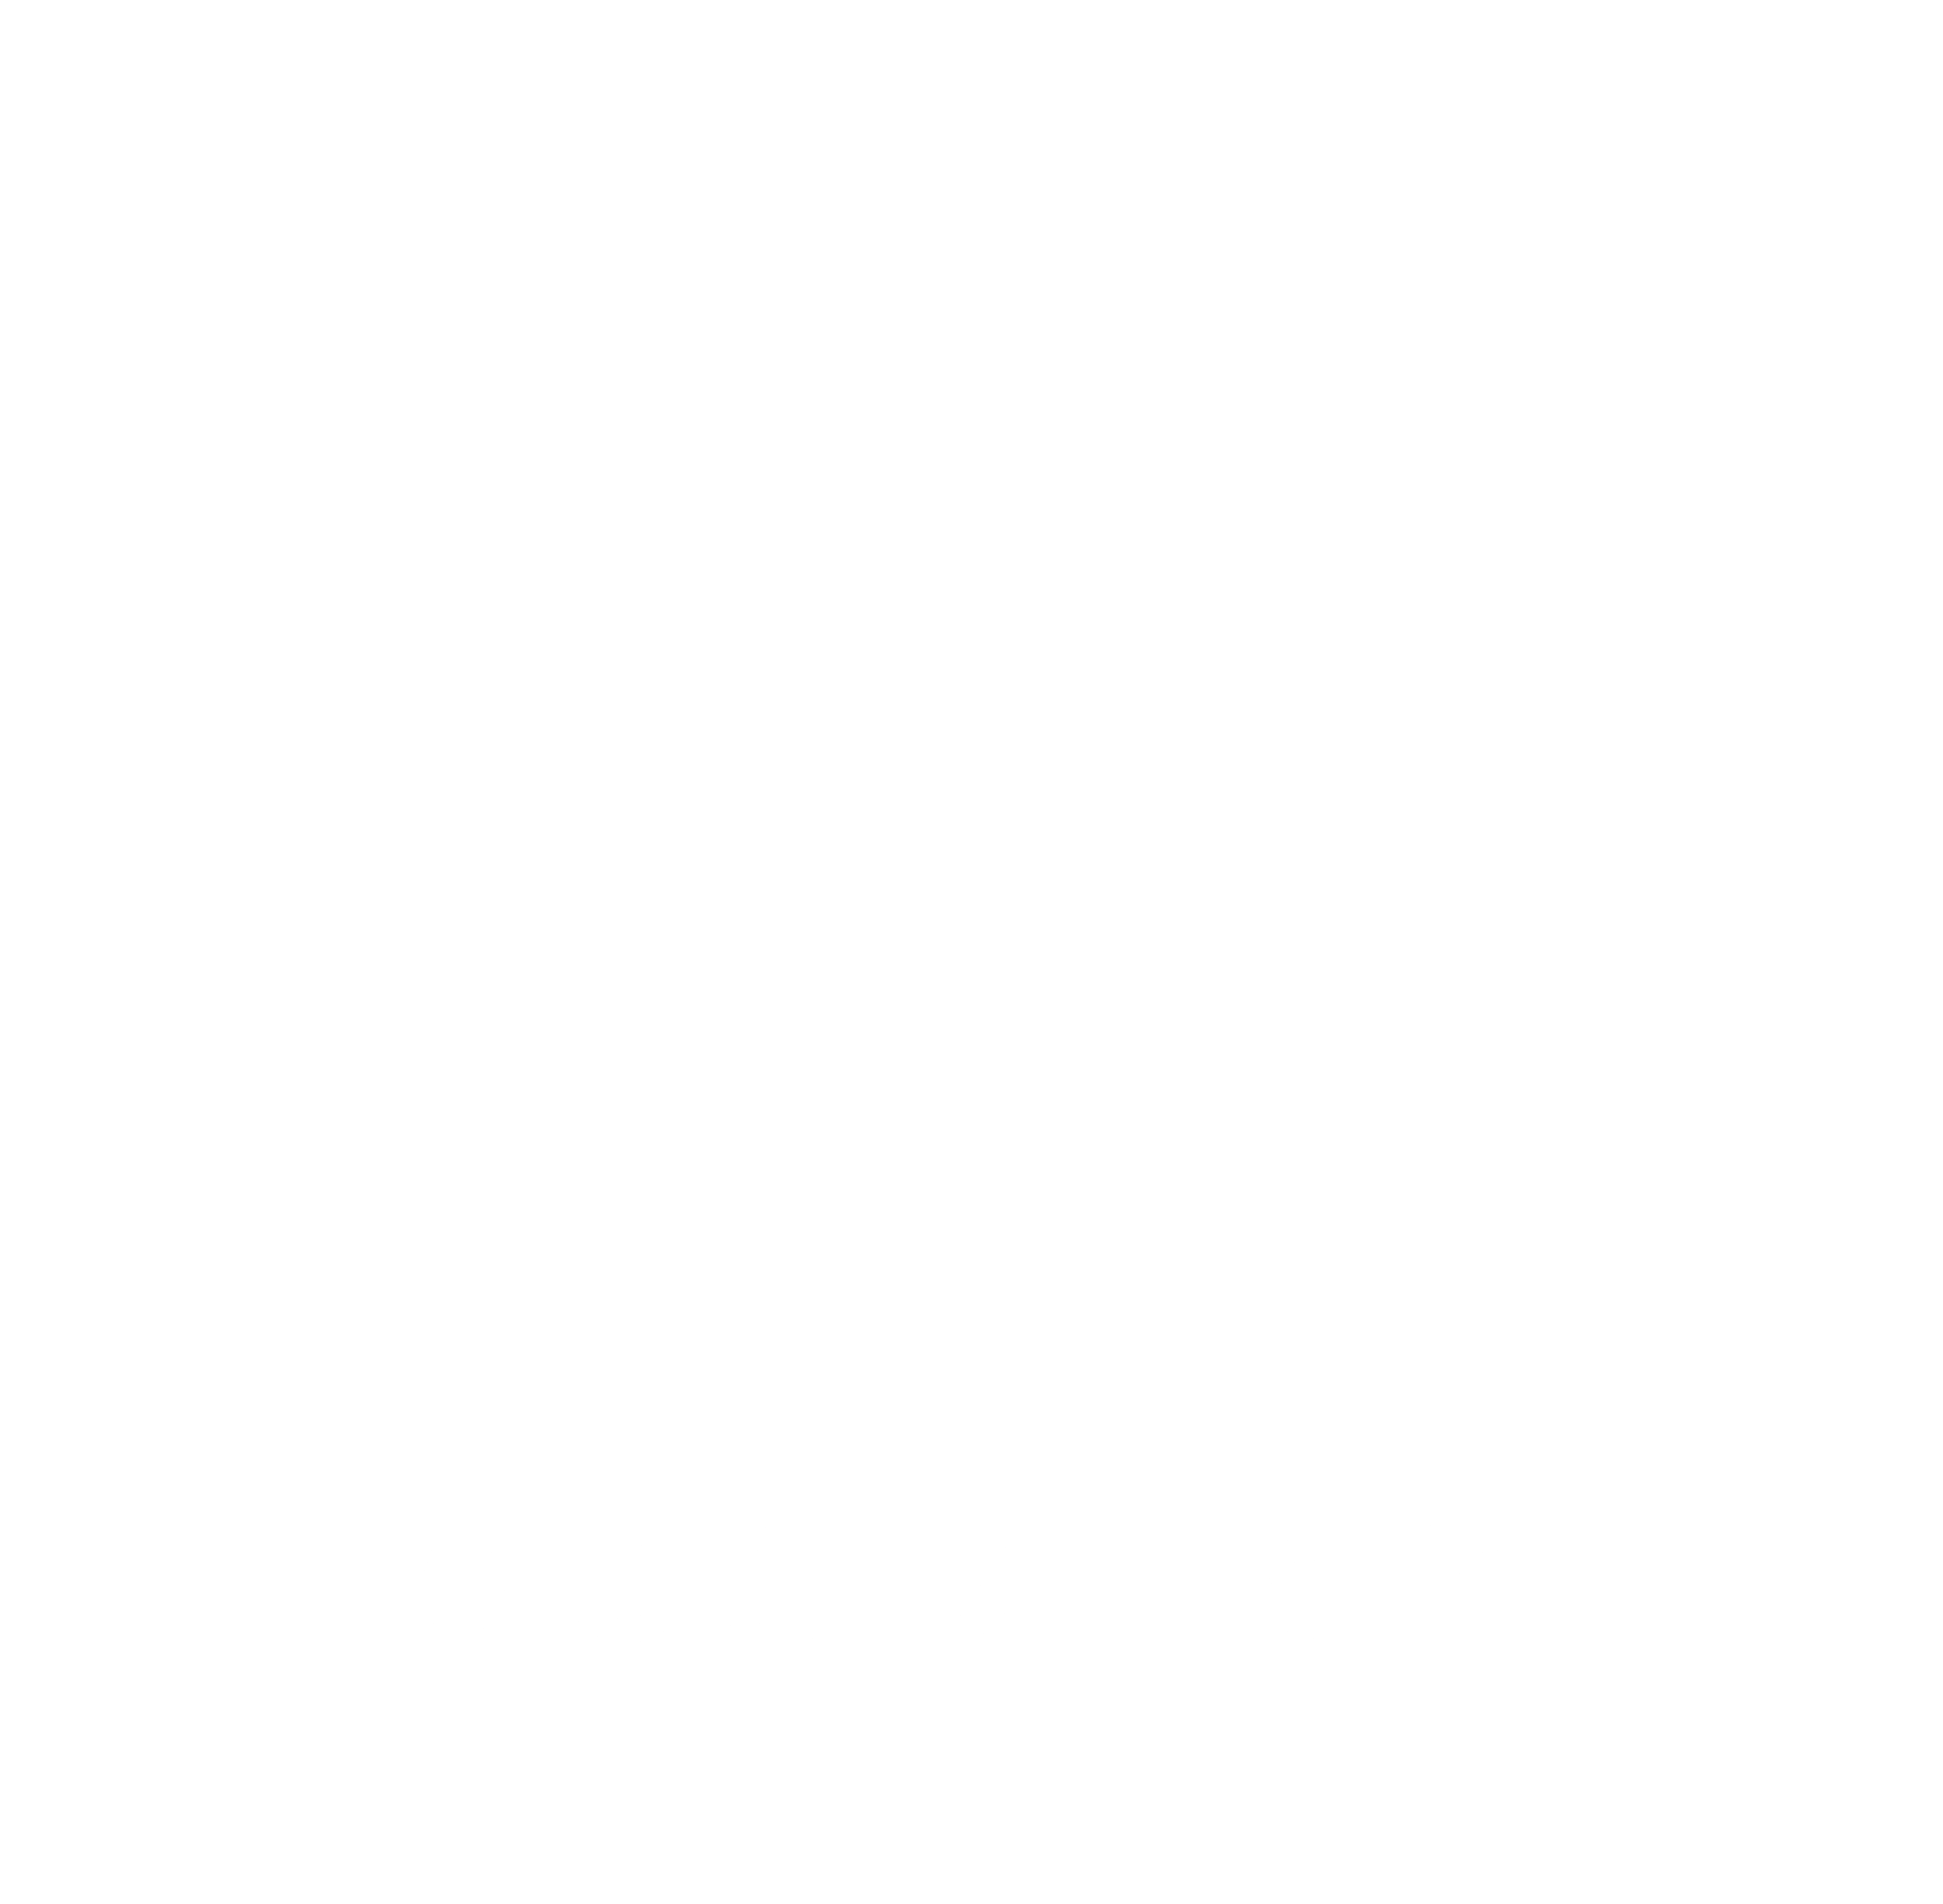 Athlets Academy A